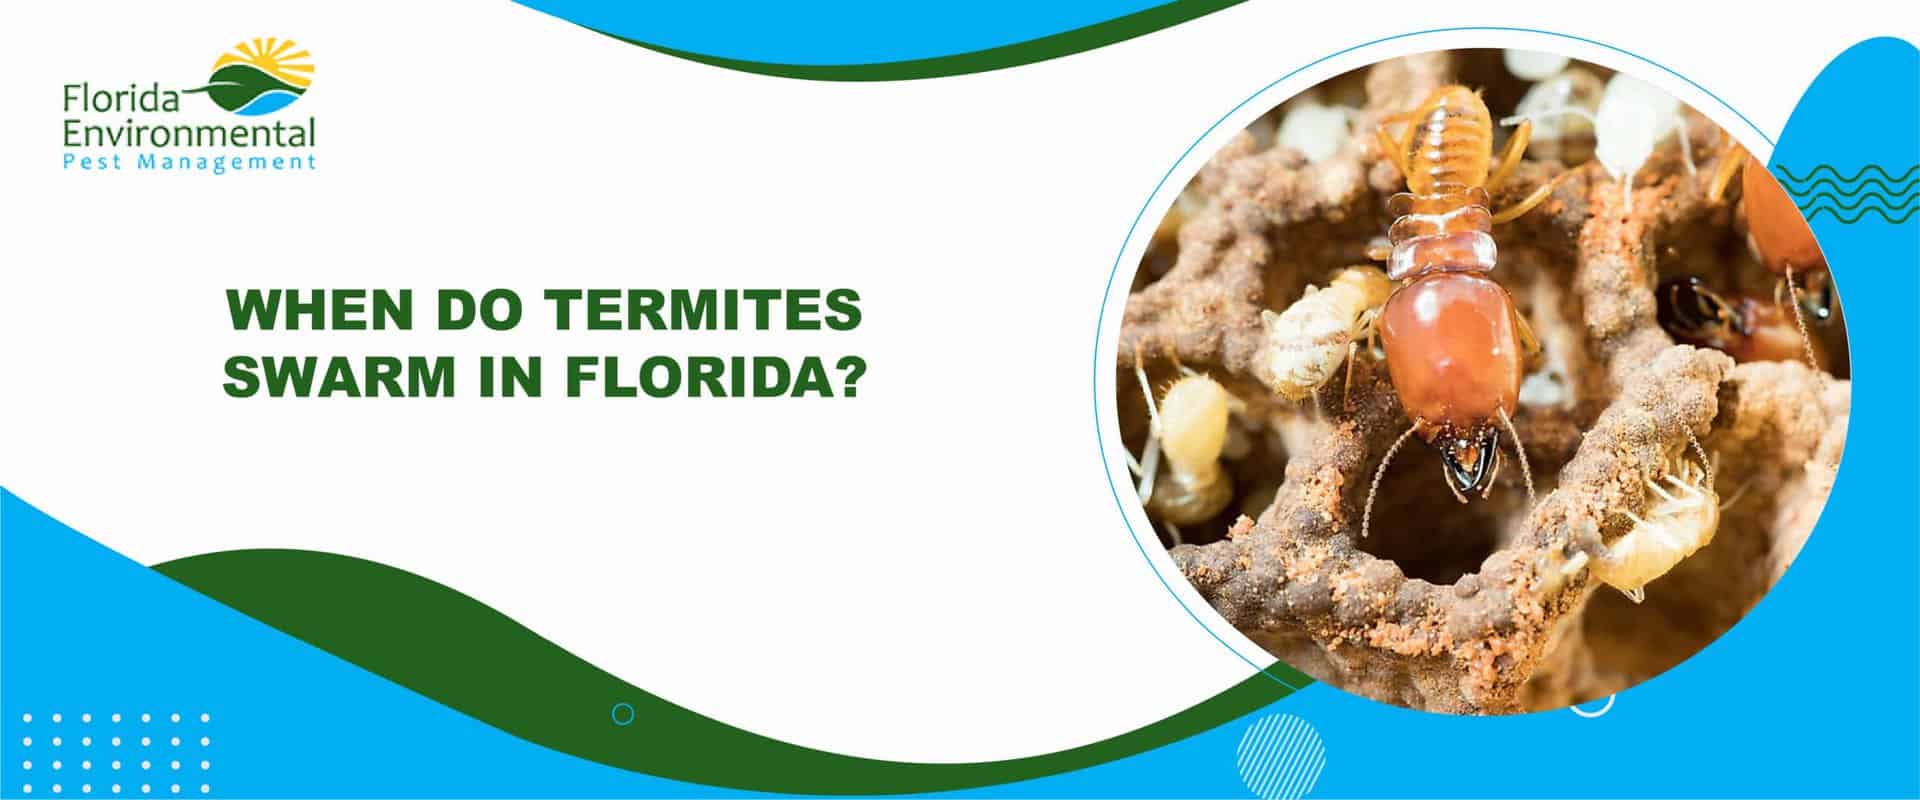 termite swarms in florida